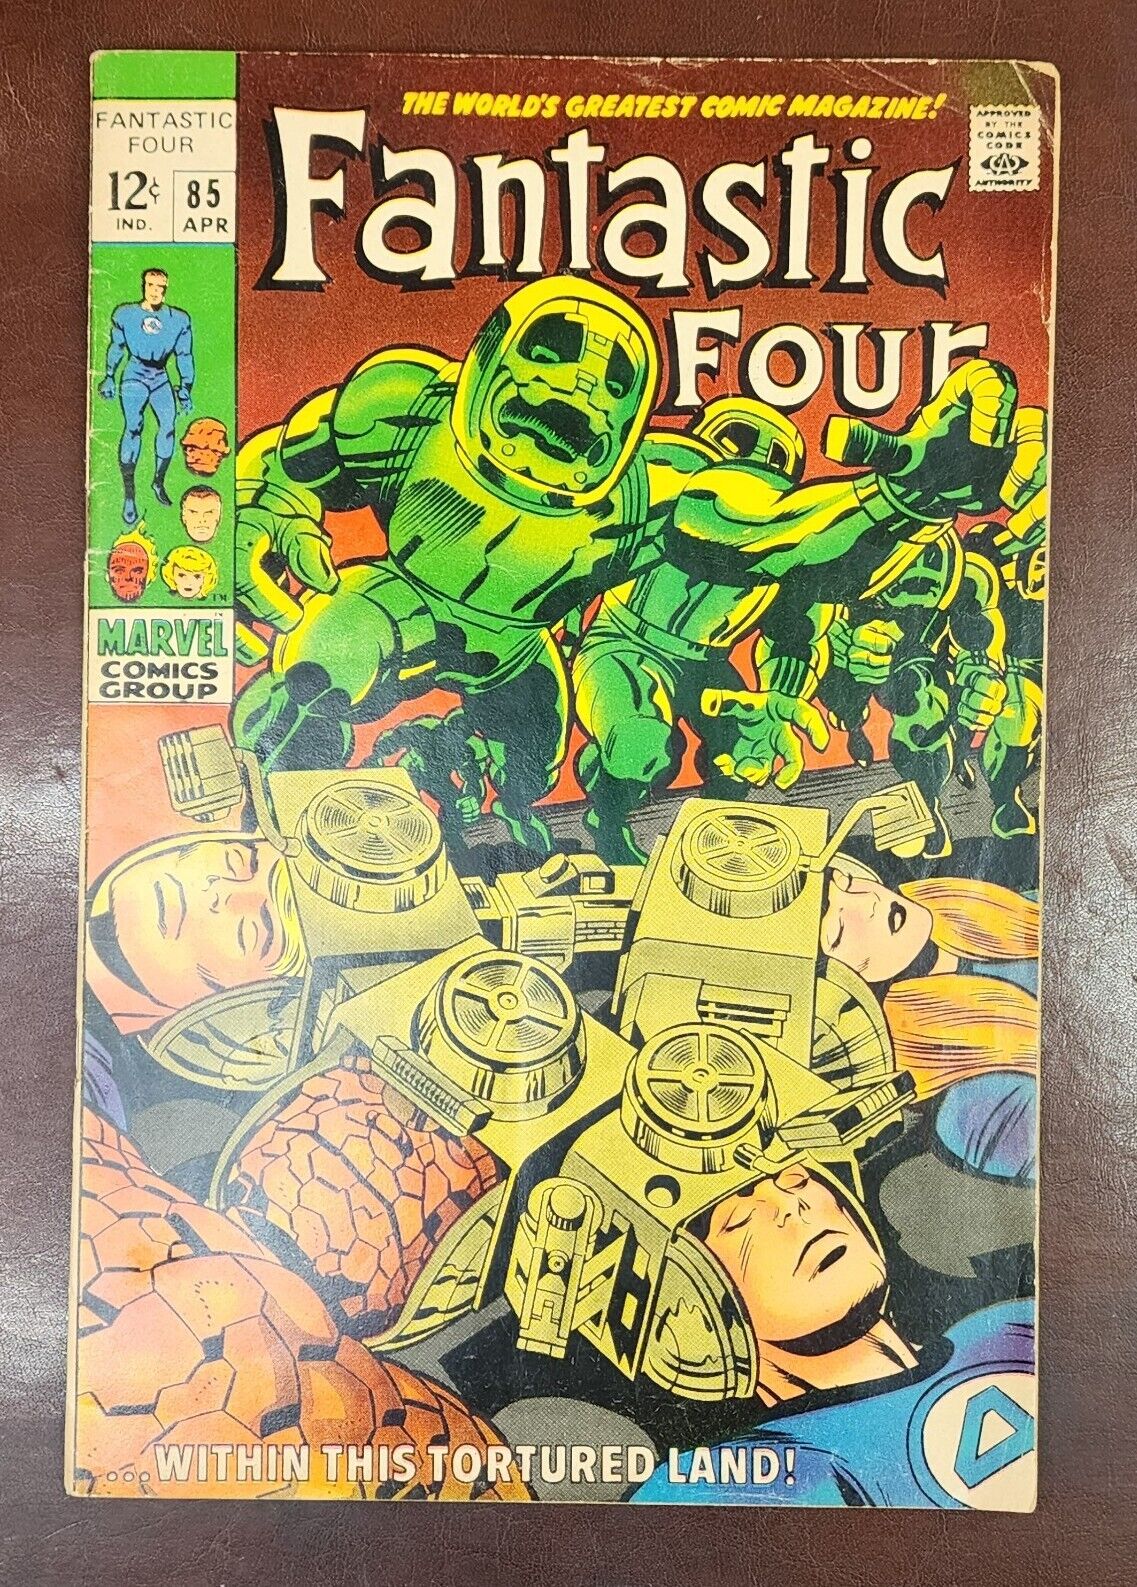 Fantastic Four #85 (Marvel, 1969) F 6.0 Jack Kirby and Joe Sinnott cover and art